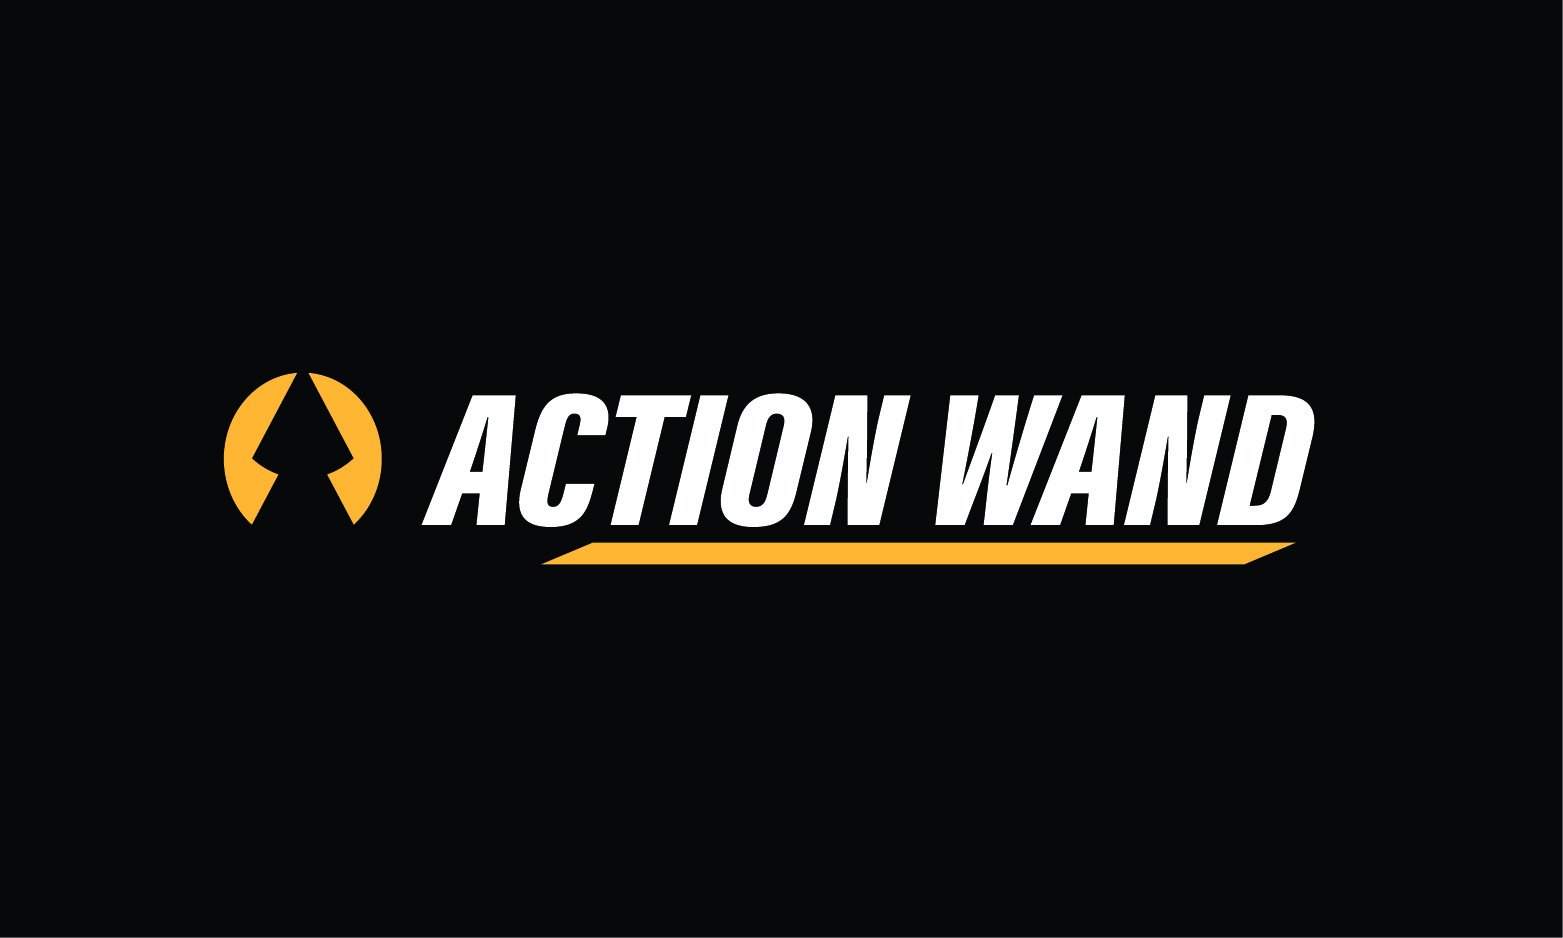 ActionWand.com - Creative brandable domain for sale